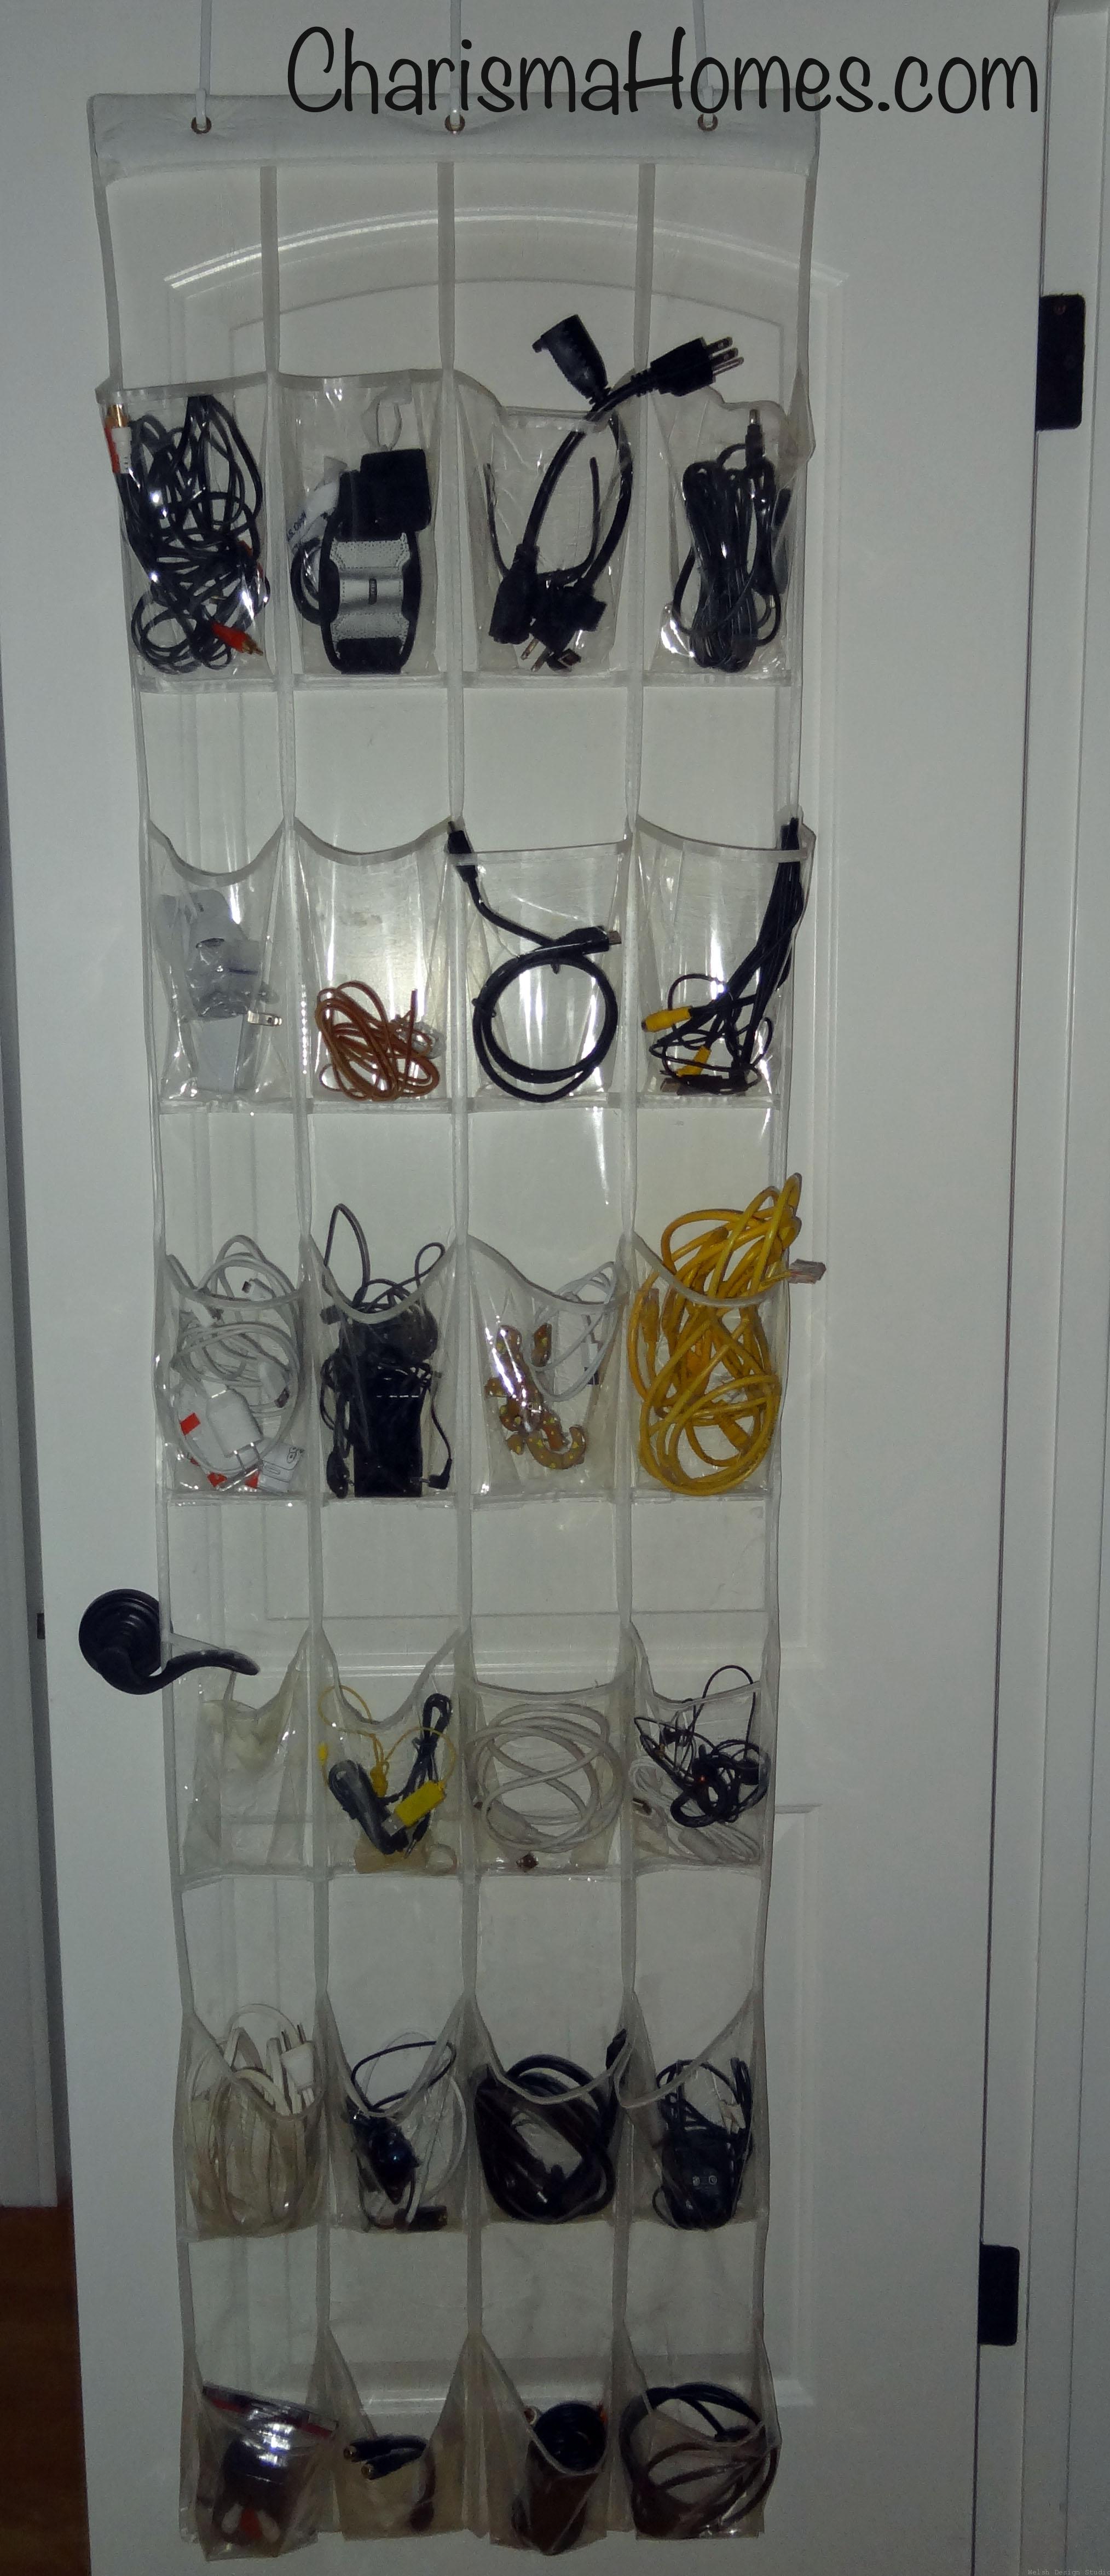 organize cords using a hanging shoe organizer